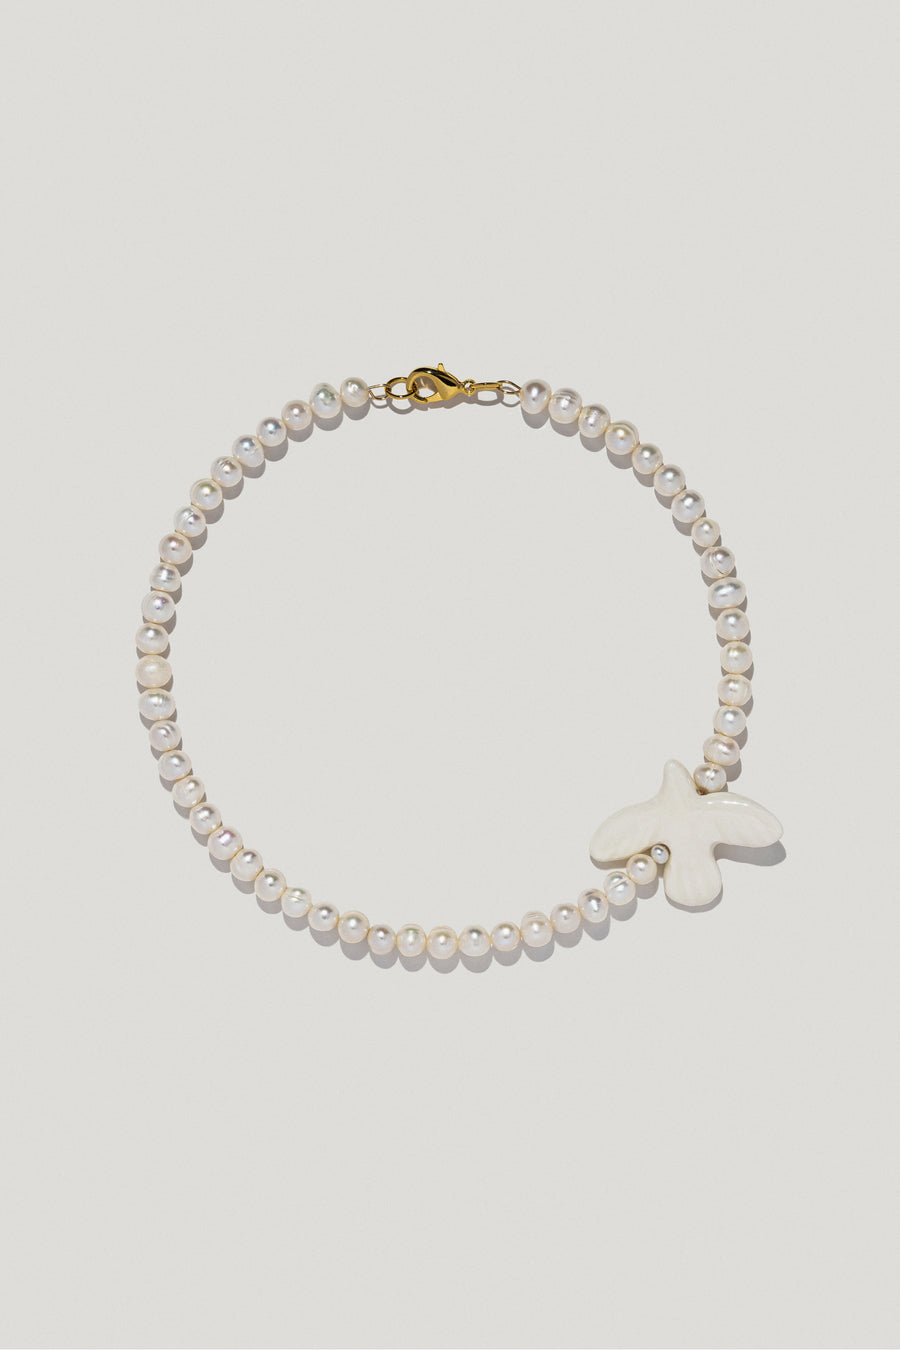 Myrni necklace with medium-sized pearls and porcelain bird